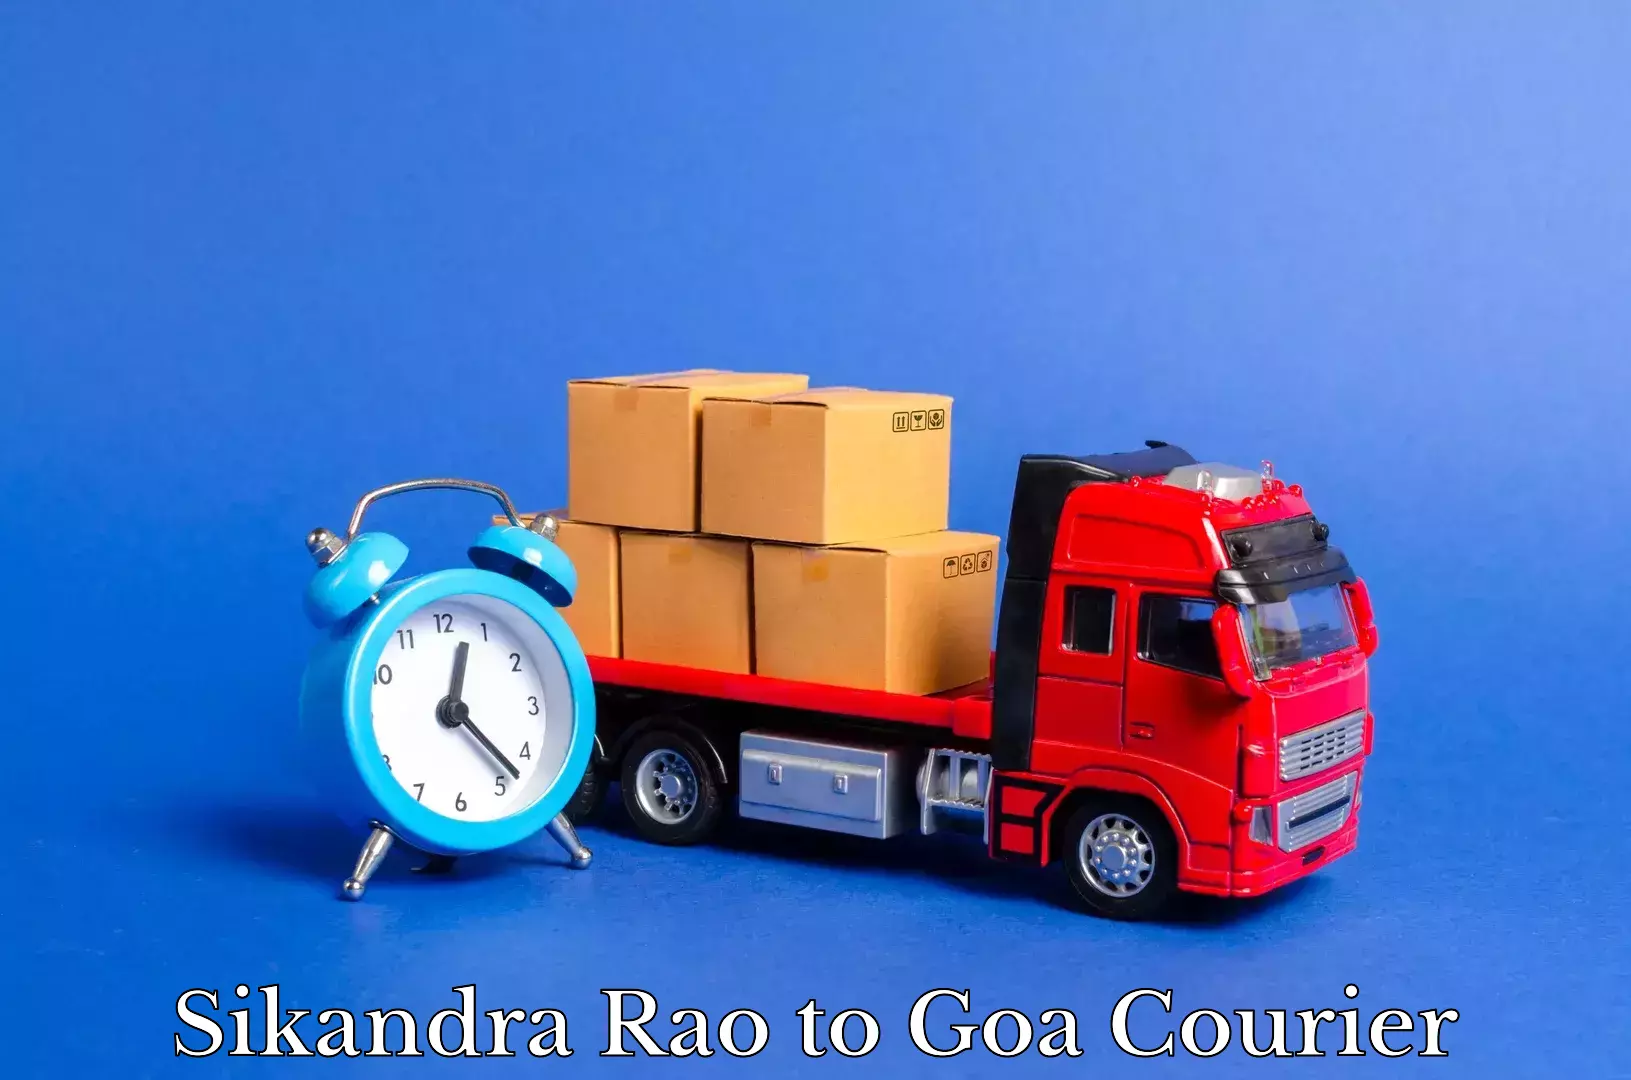 Quality relocation services Sikandra Rao to Goa